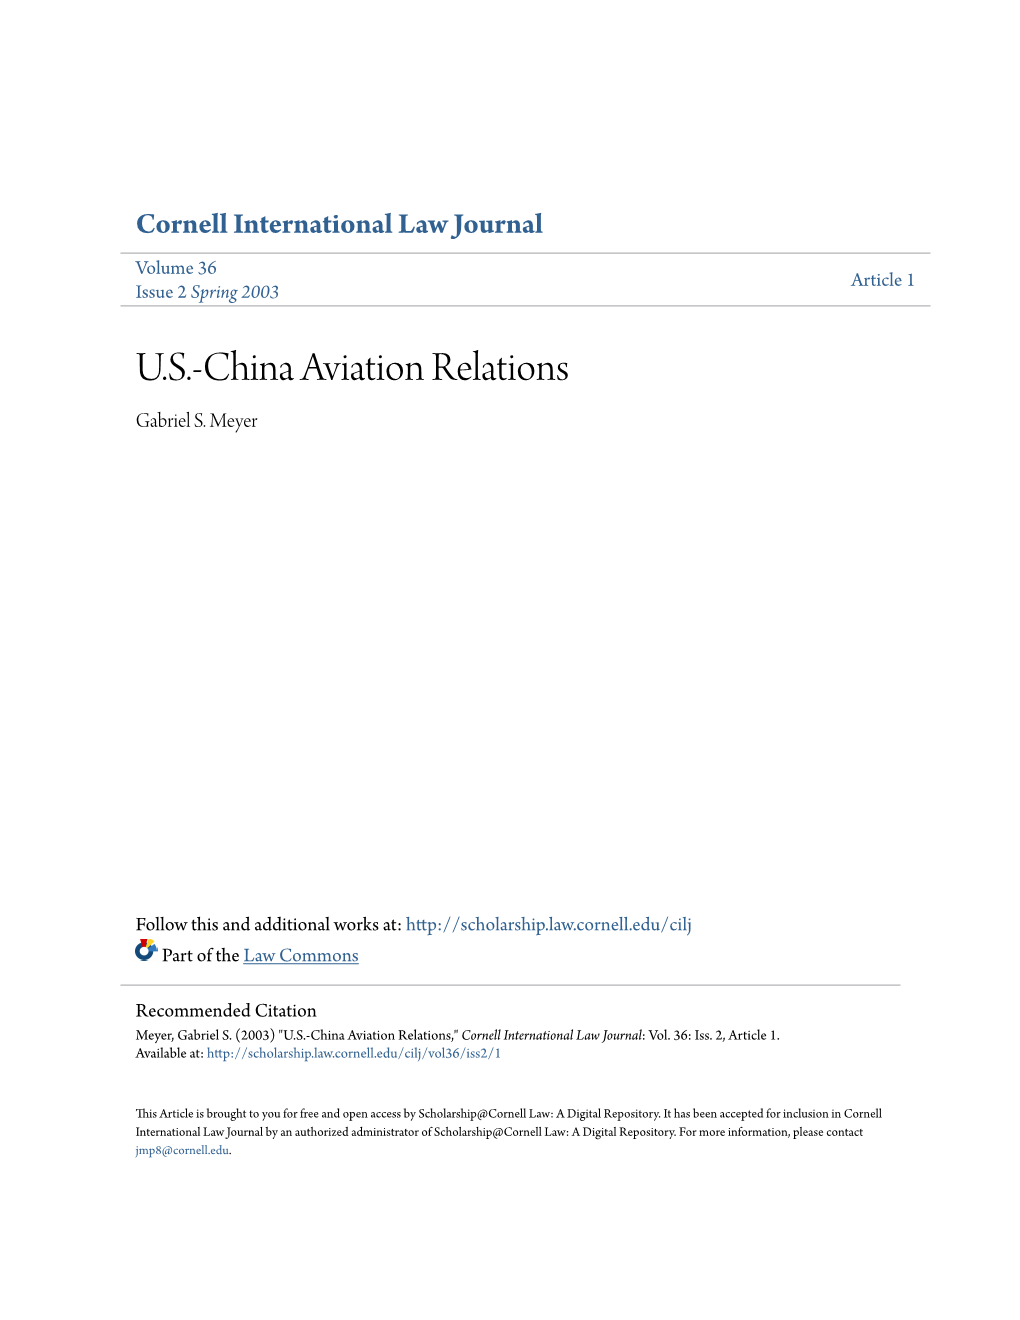 U.S.-China Aviation Relations Gabriel S